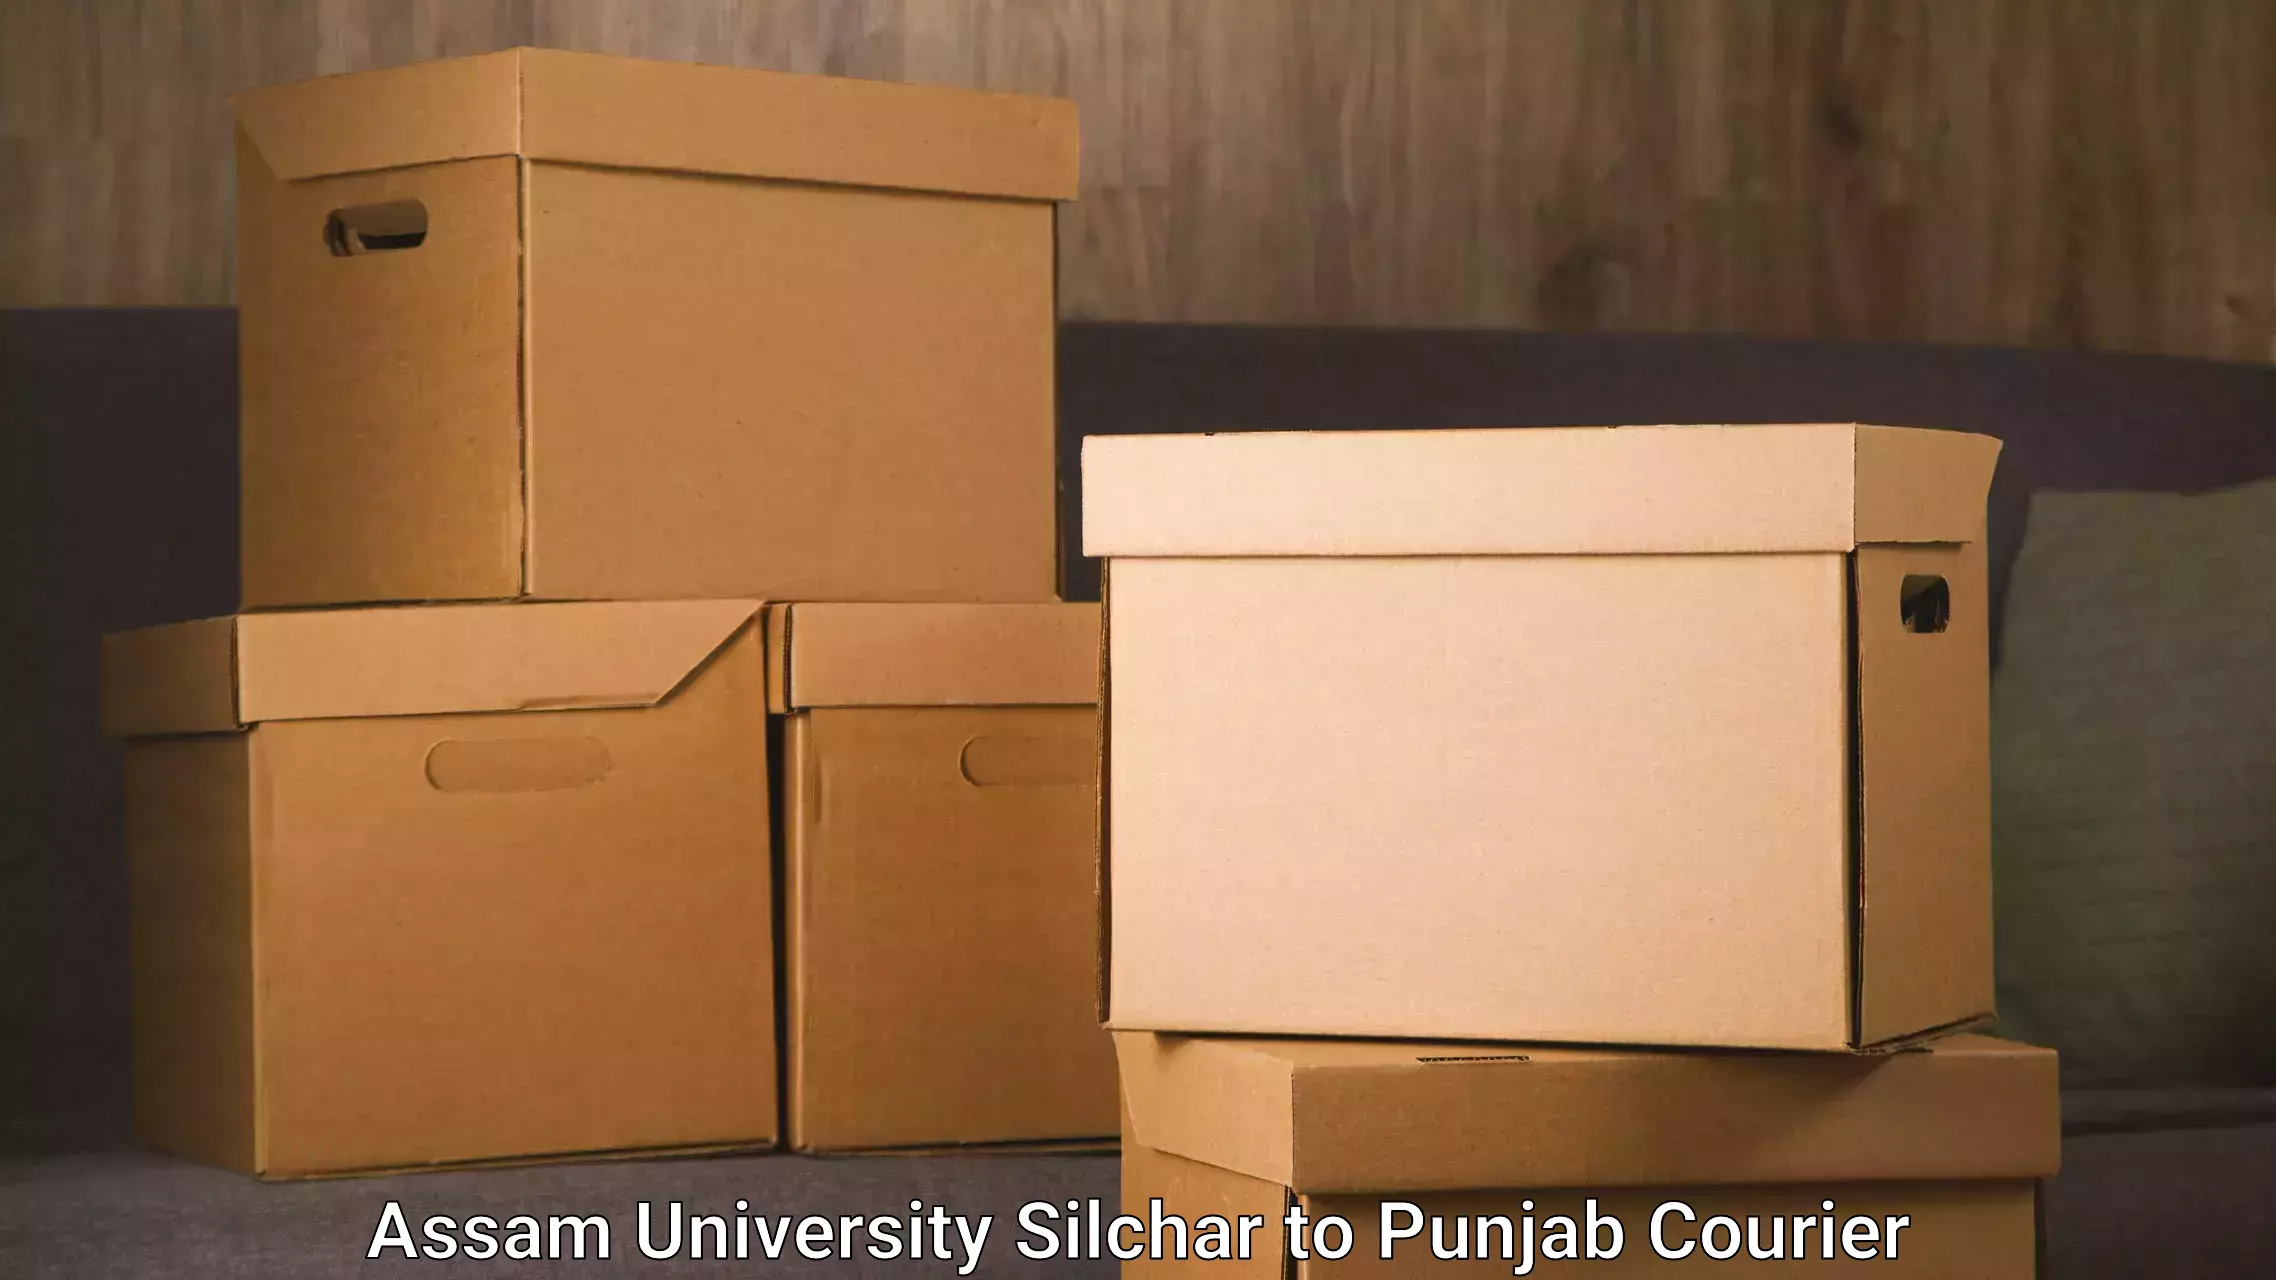 Global logistics network Assam University Silchar to Ludhiana